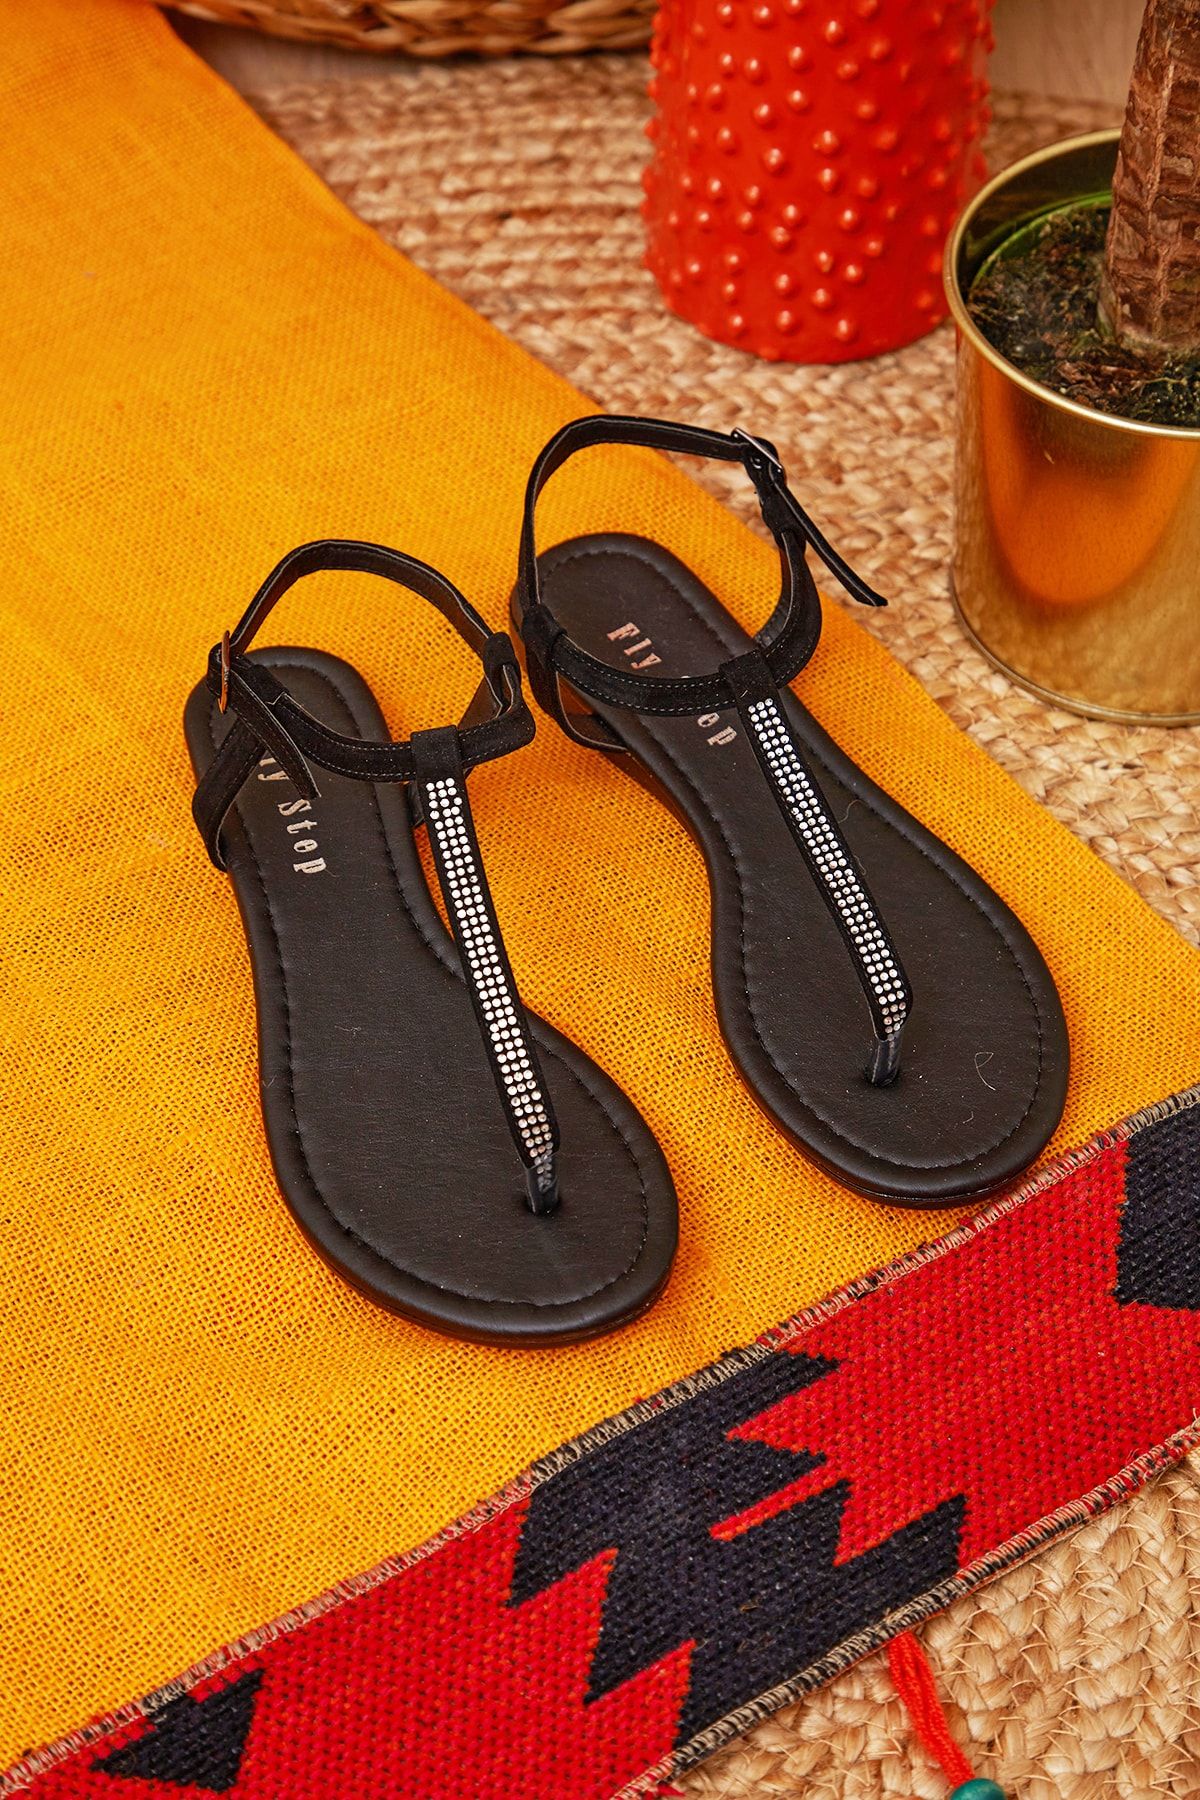 Shoes Time Kadın Siyah Sandalet 20y 929